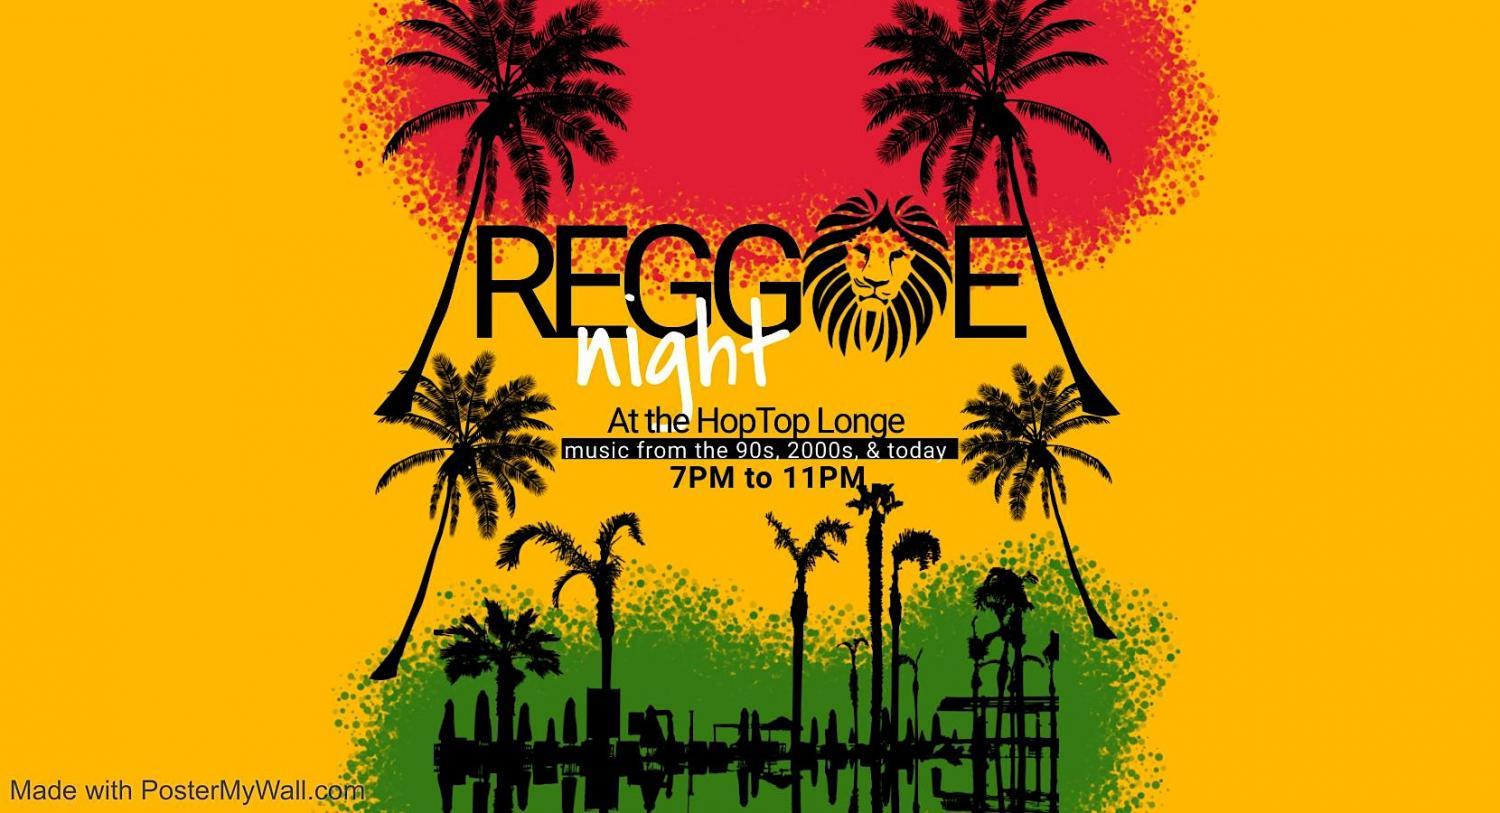 Sunday Funday: Reggae Music Night
Sun Oct 23, 7:00 PM - Sun Oct 23, 11:00 PM
in 3 days